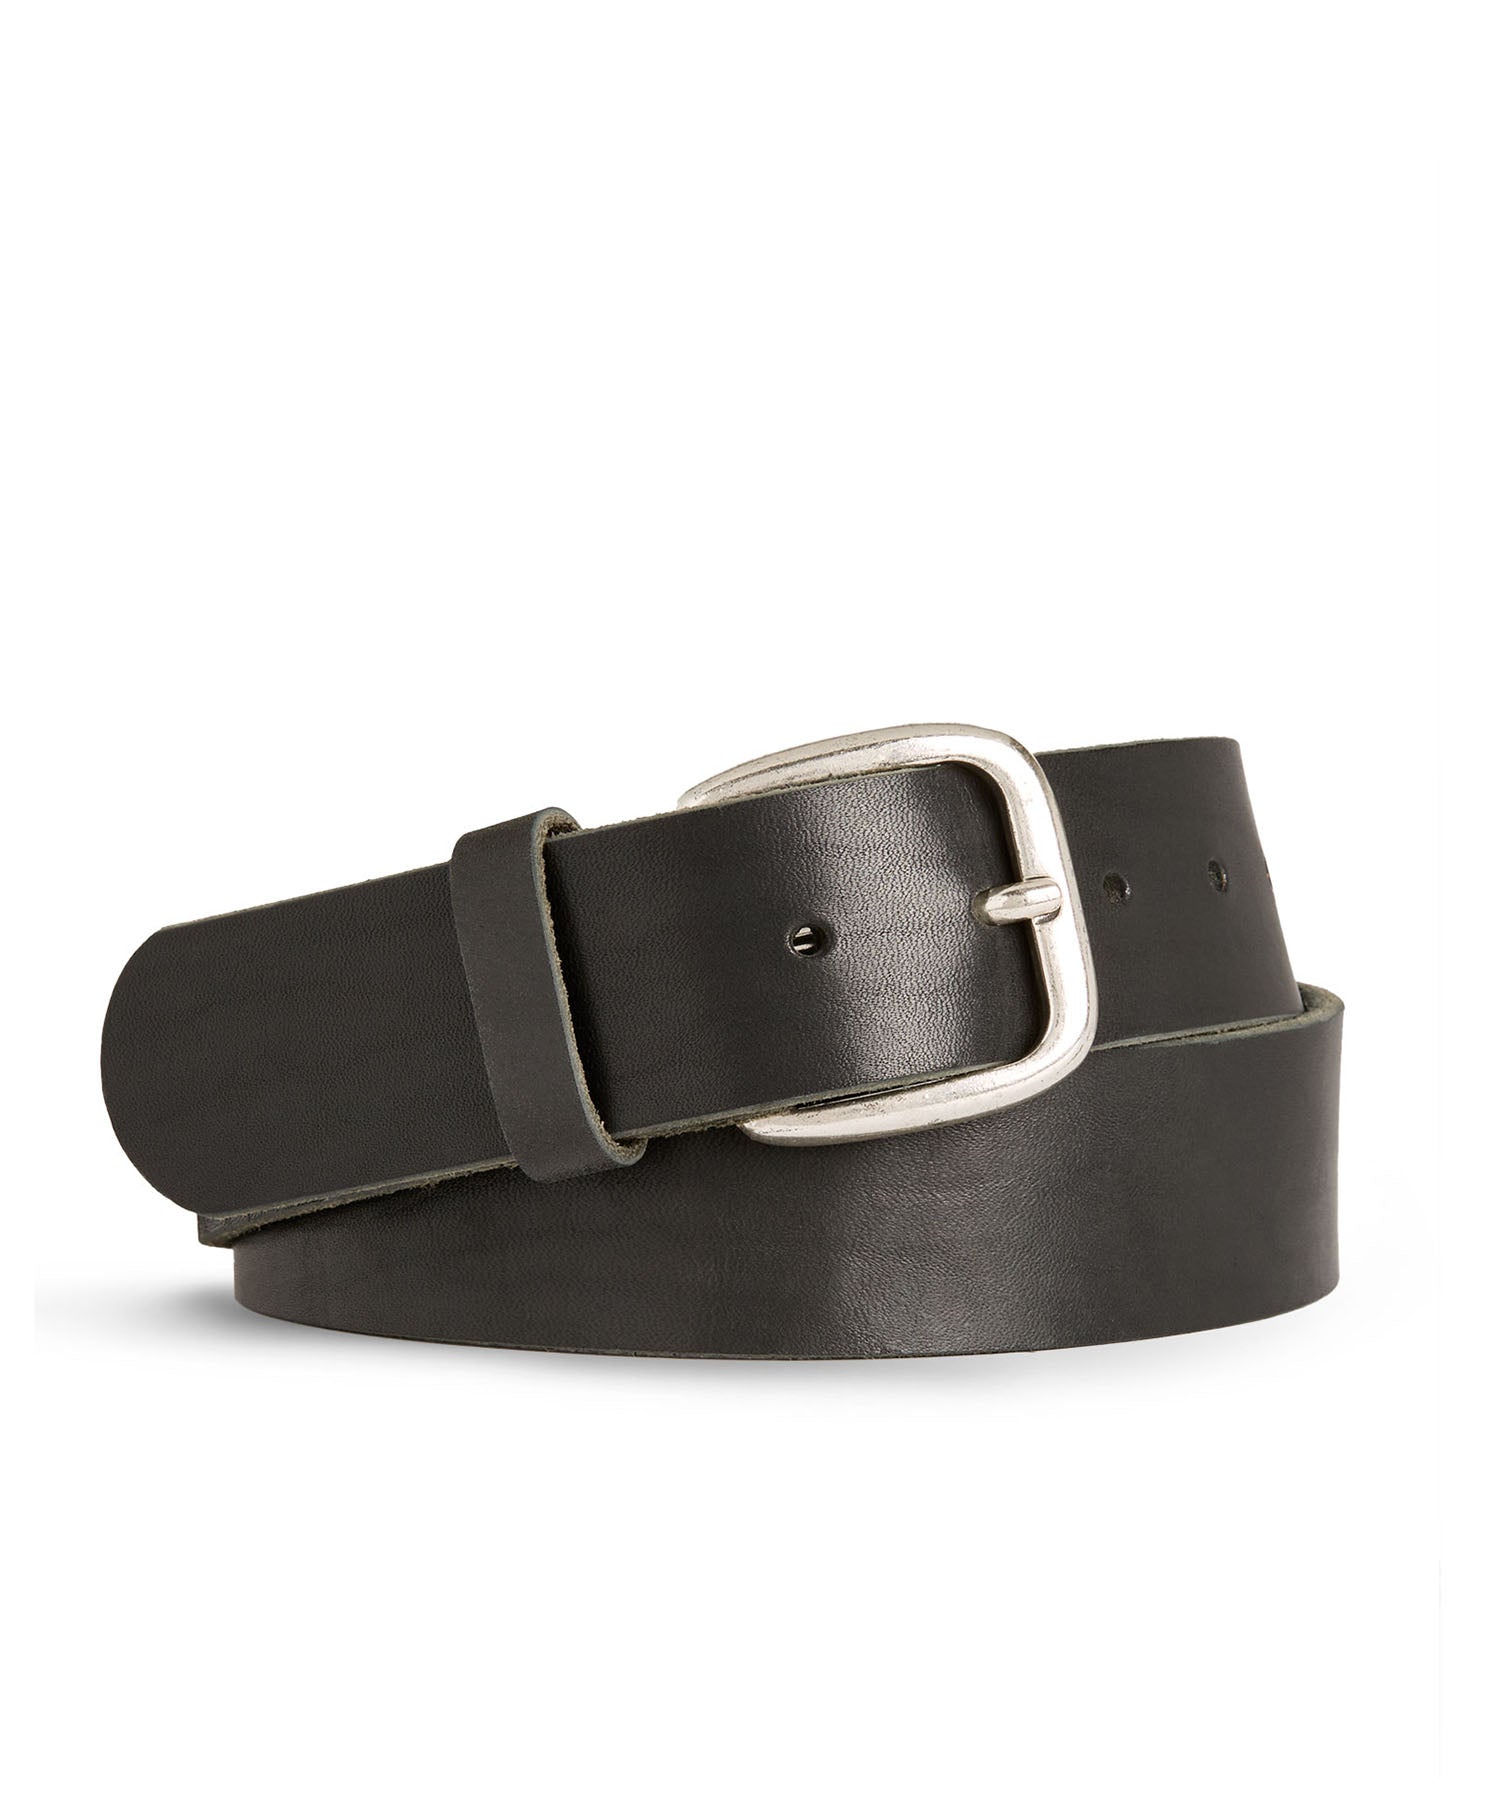 Westport 1989 40mm Leather Belt